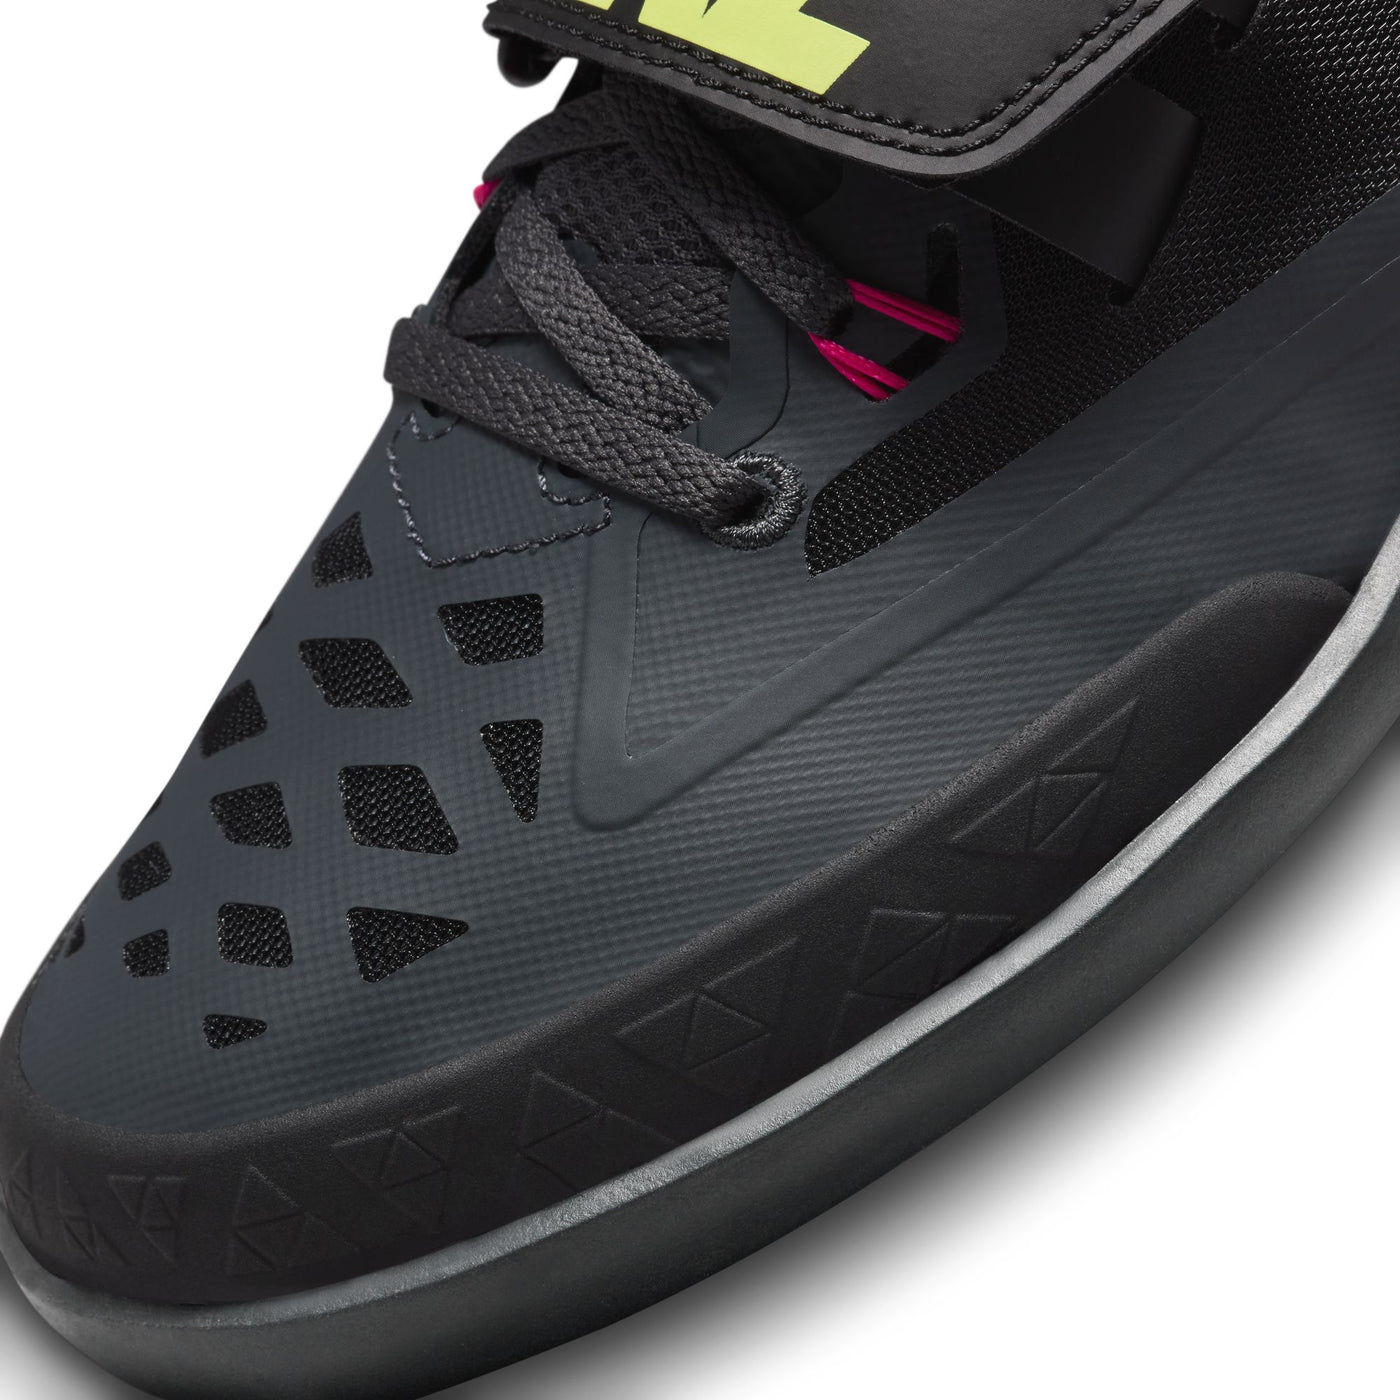 Unisex Nike Zoom SD 4 Throwing Shoe - 685135-004